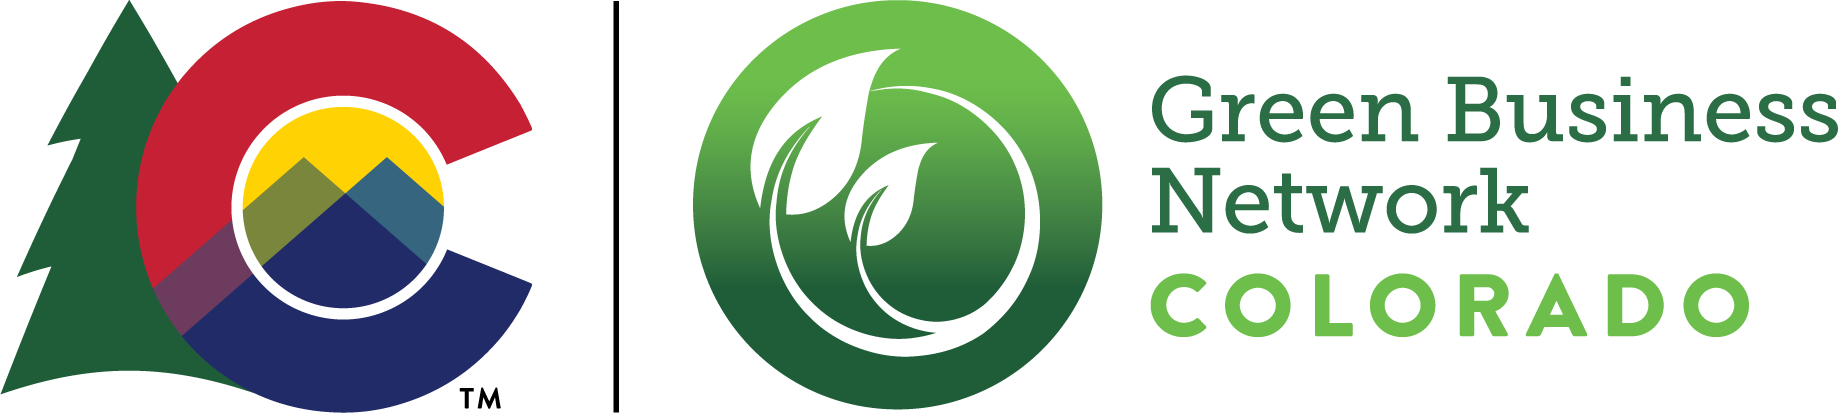 Green Business Network Silver Member Logo